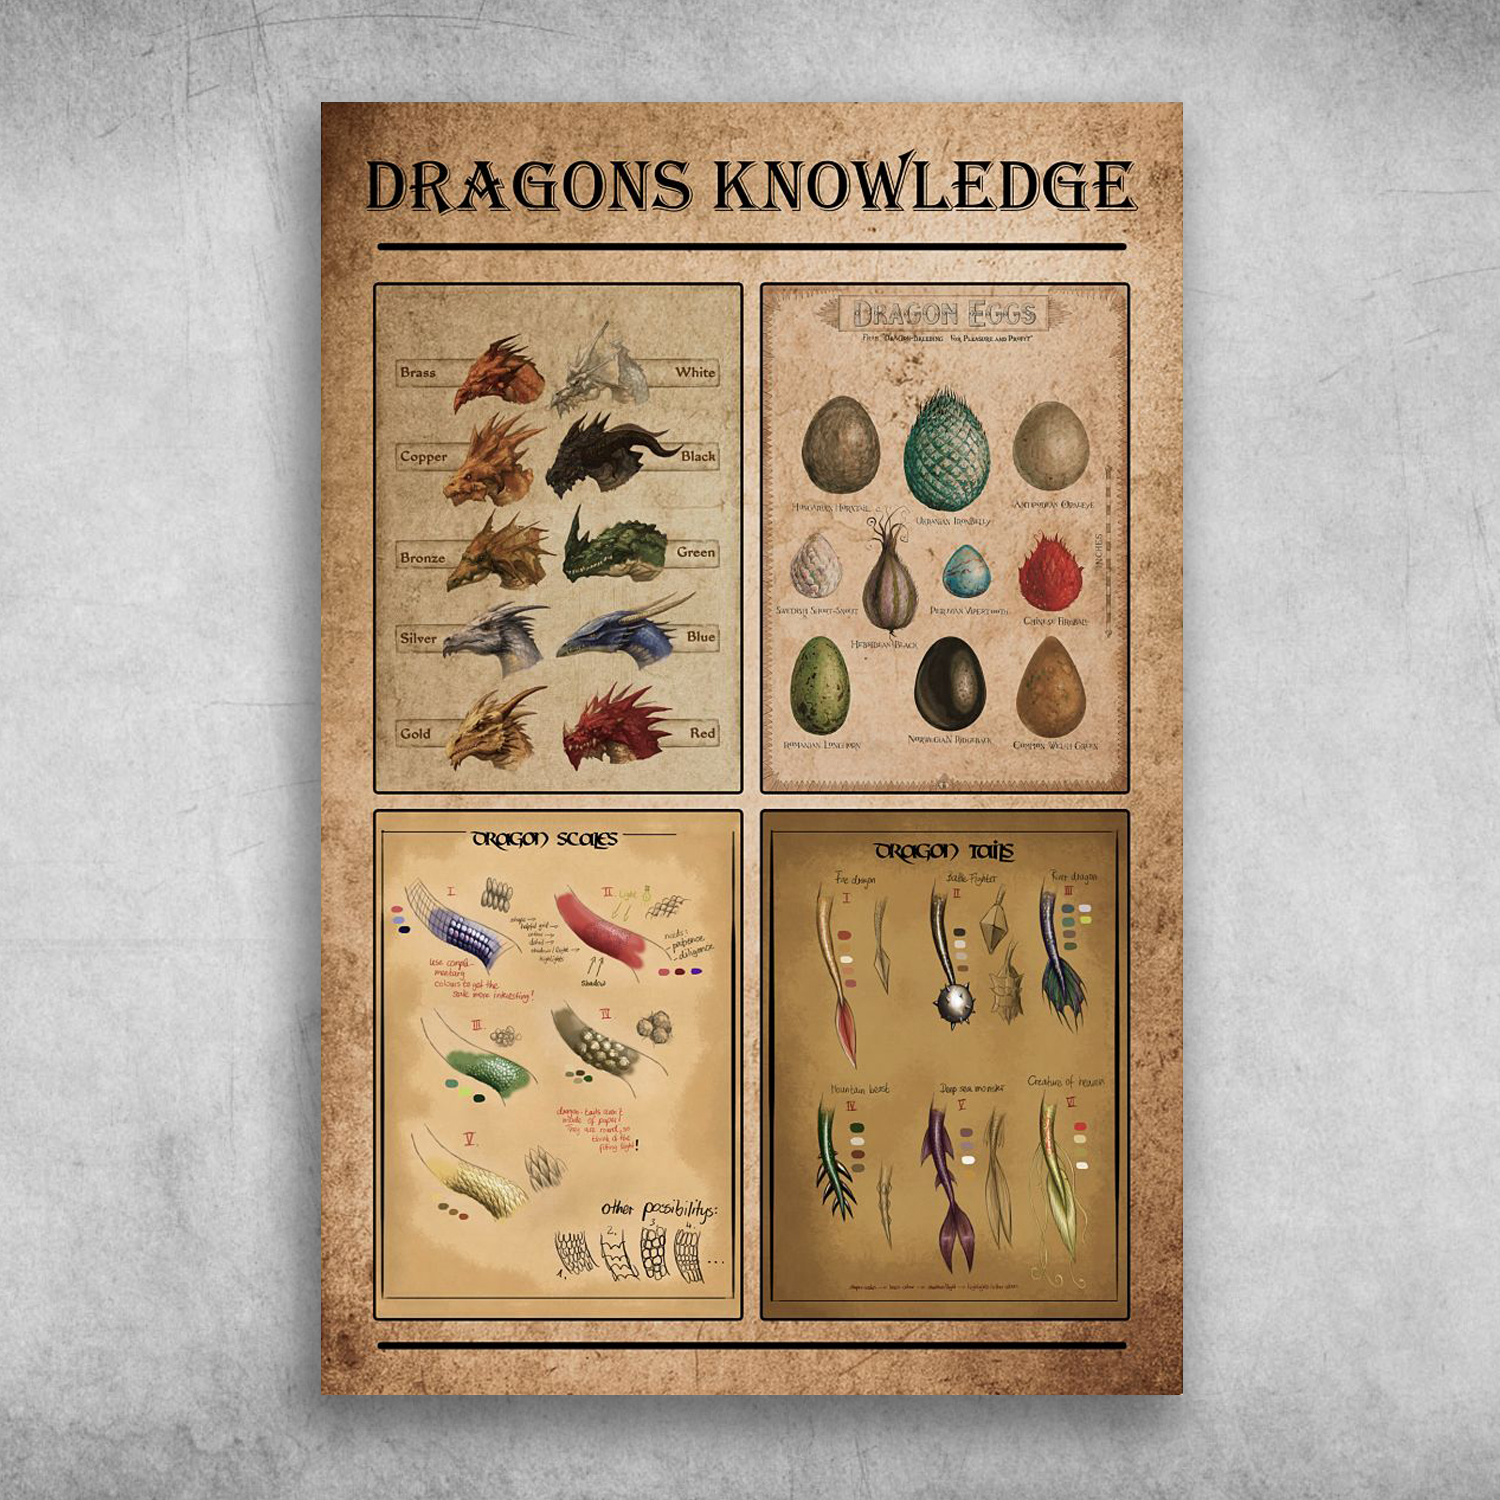 Dragons Knowledge Dragon Eggs Dragon Scales Dragon Tails